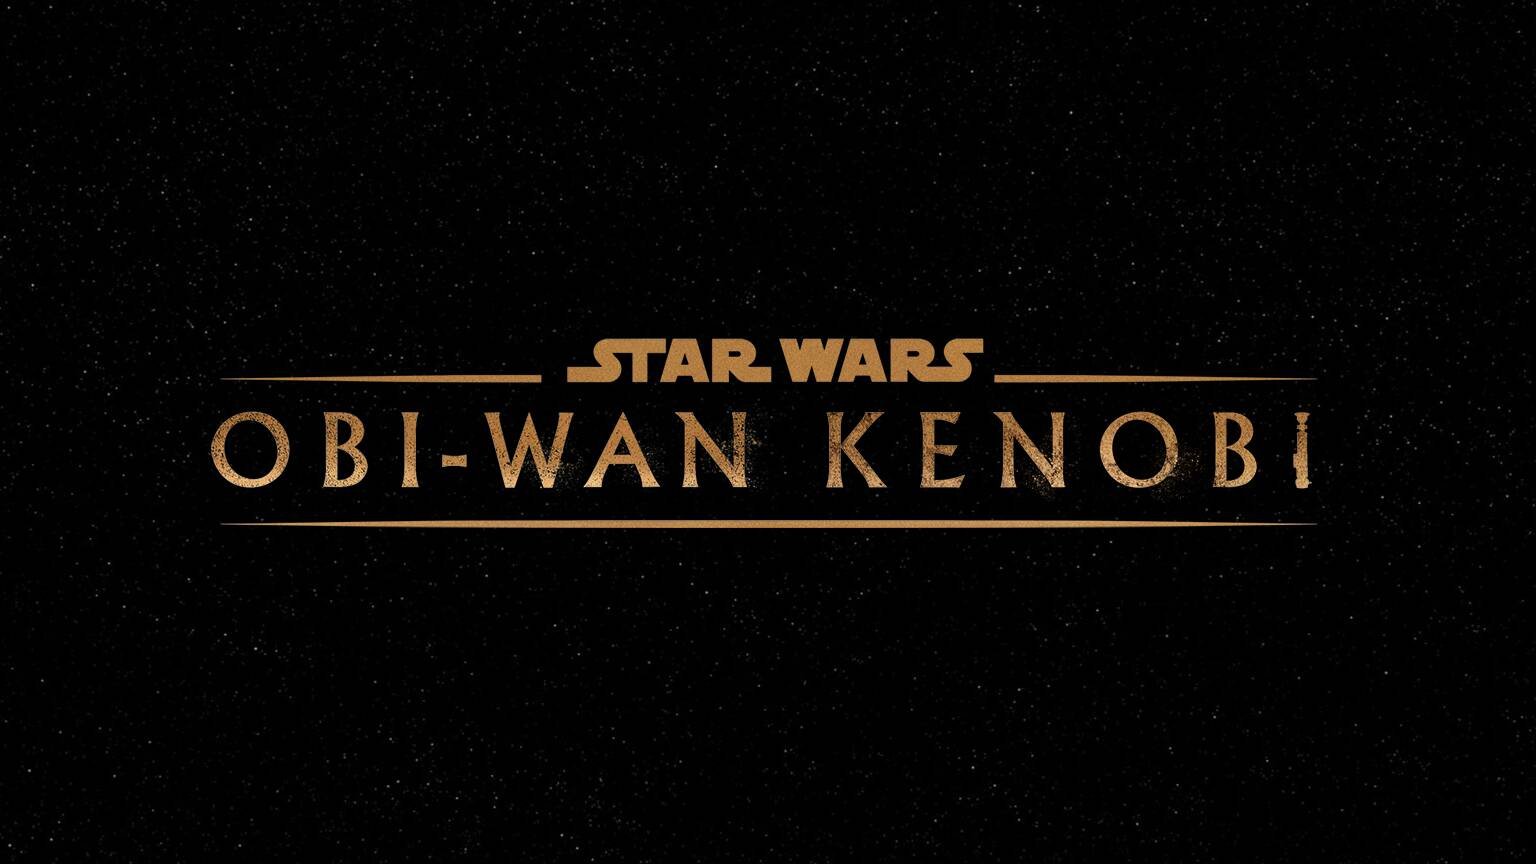 Immagine di Obi-Wan Kenobi: l'Ordine 66 e i Jedi sopravvisuti